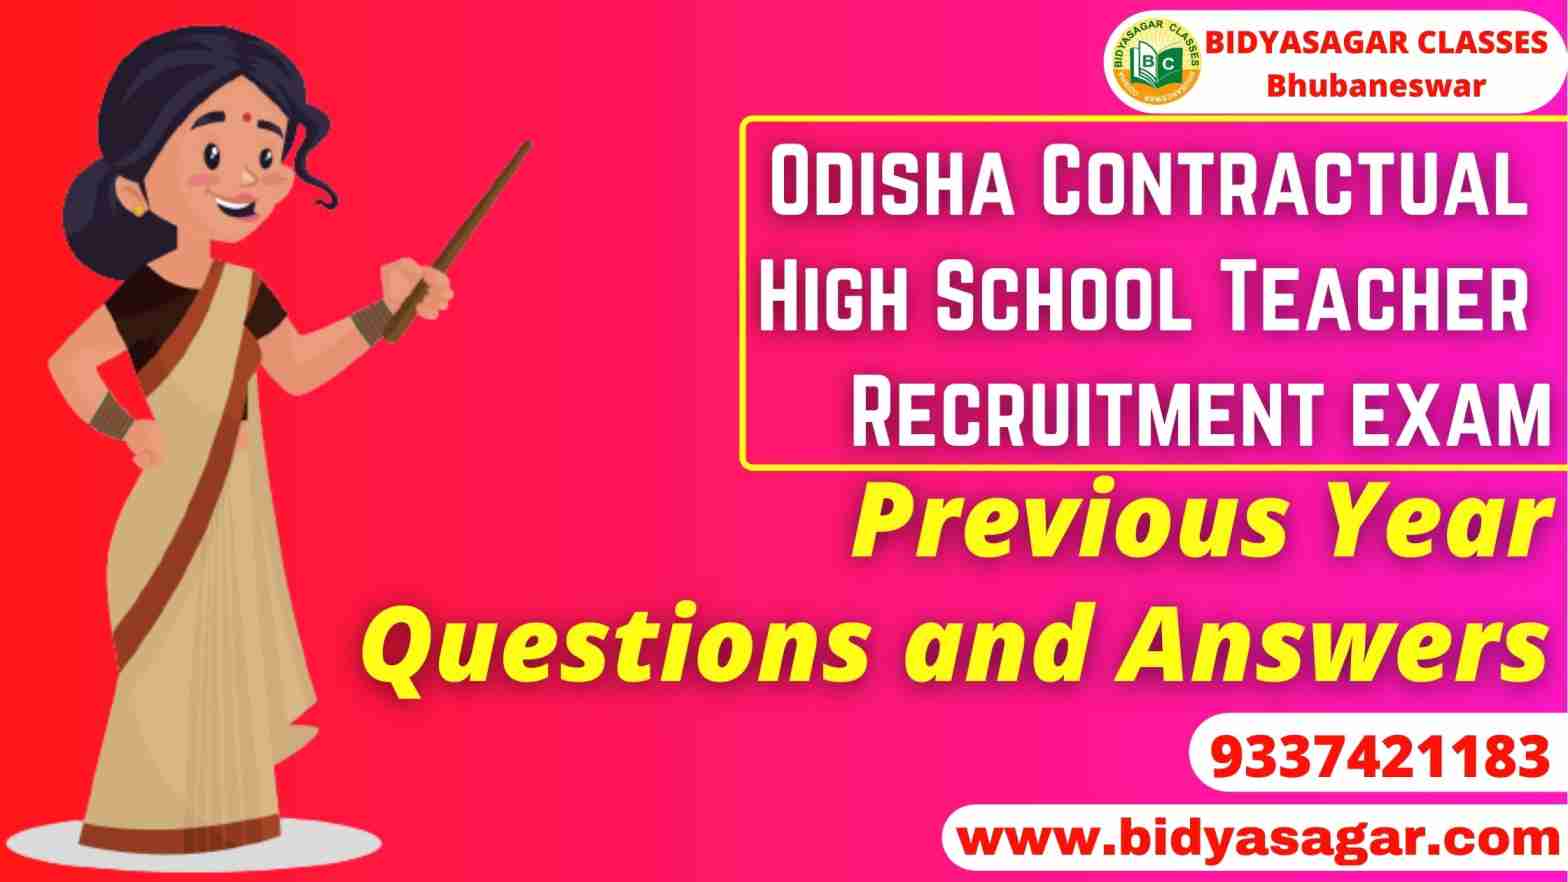 Odisha Contractual High School Teacher Recruitment Exam Previous Year Questions